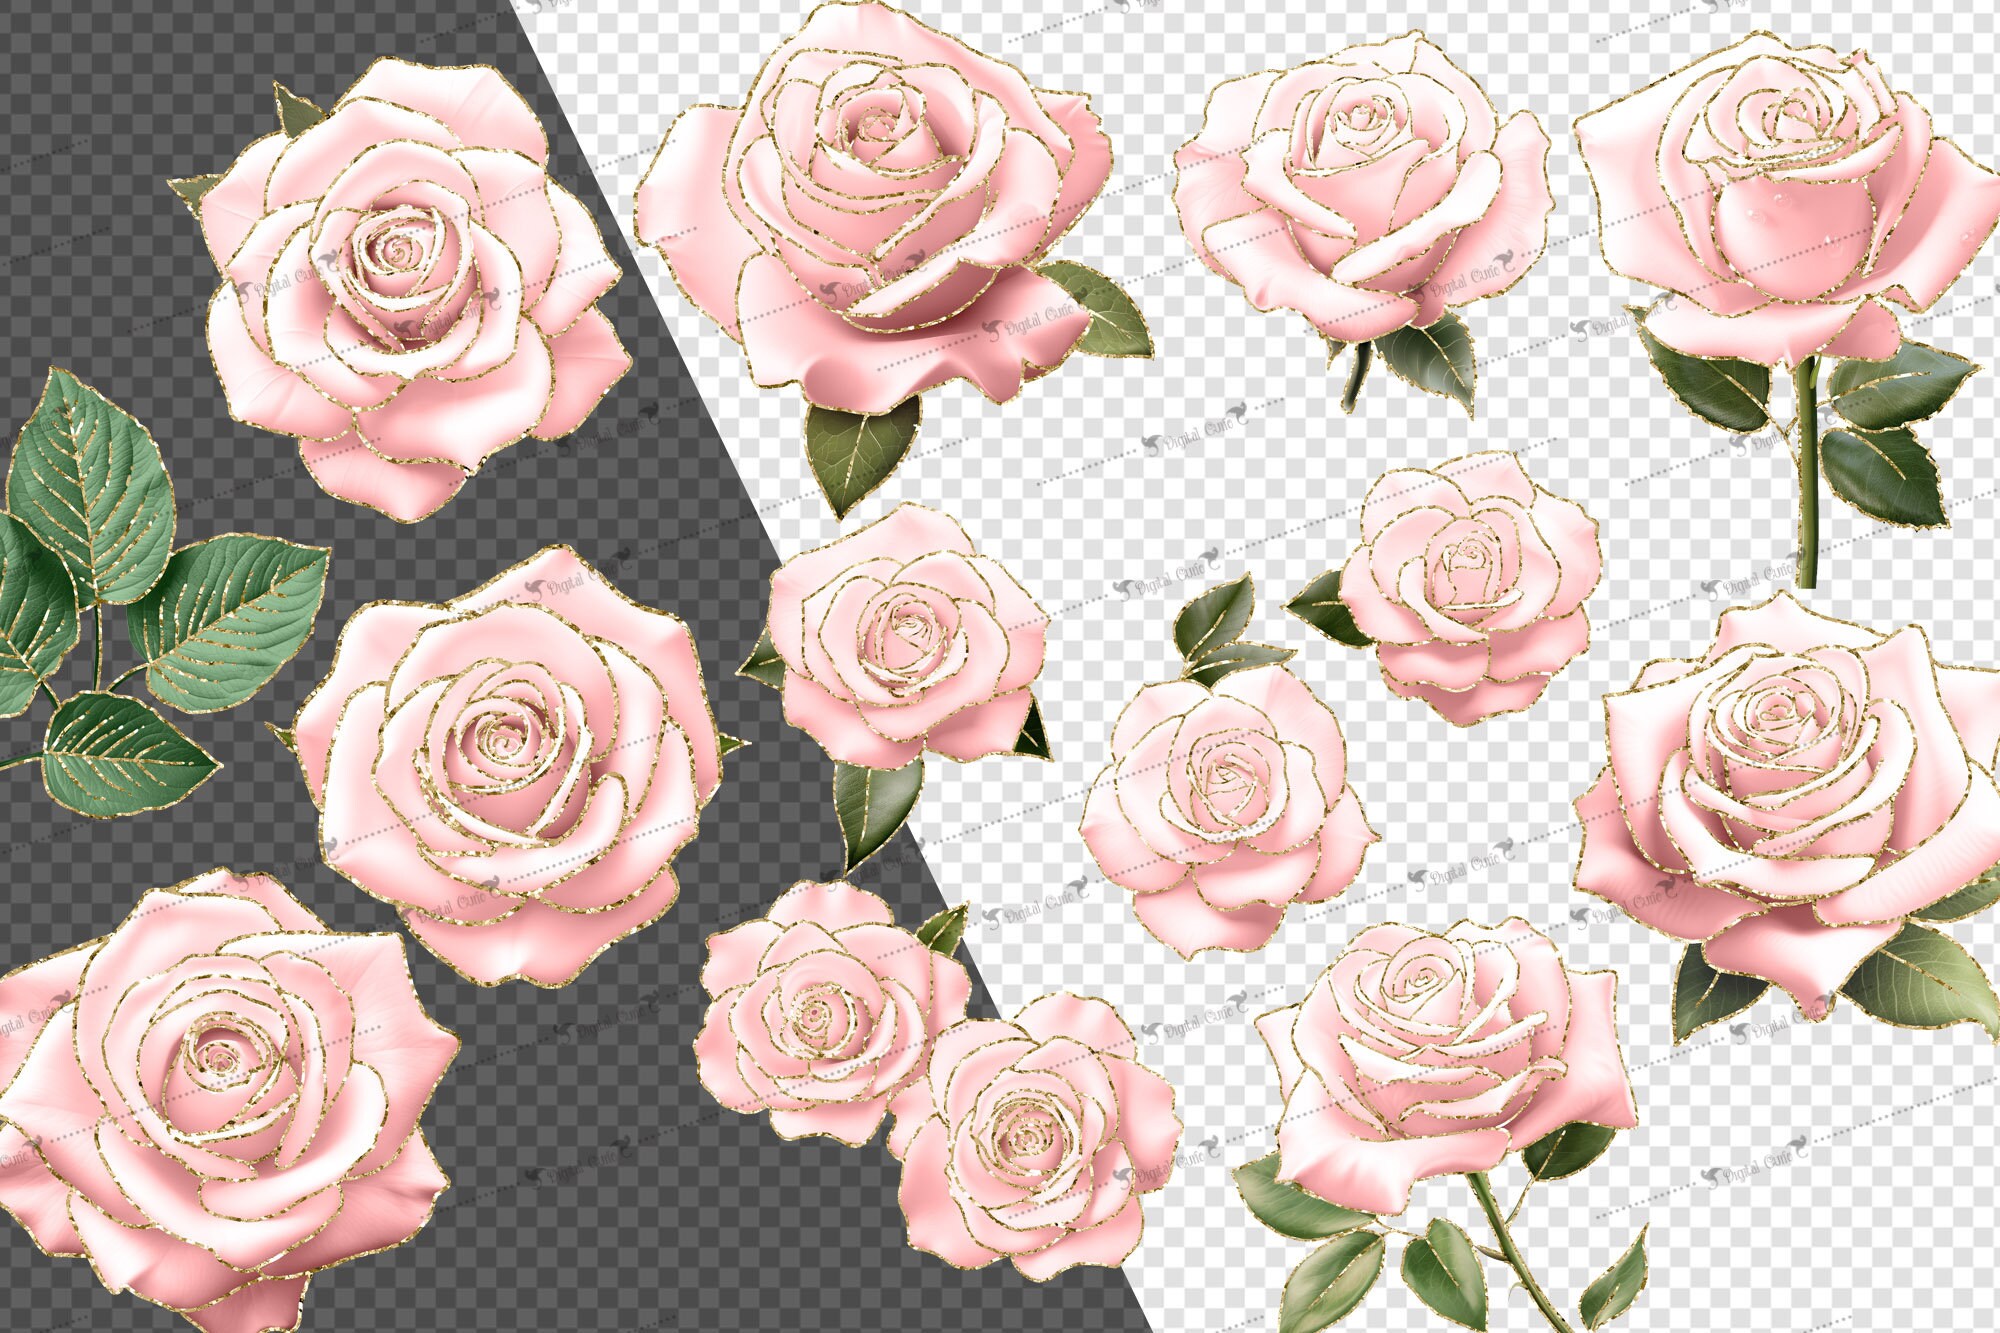 Liquid Rose Gold Clip Art Set - PrettyWebz Media Business Templates &  Graphics